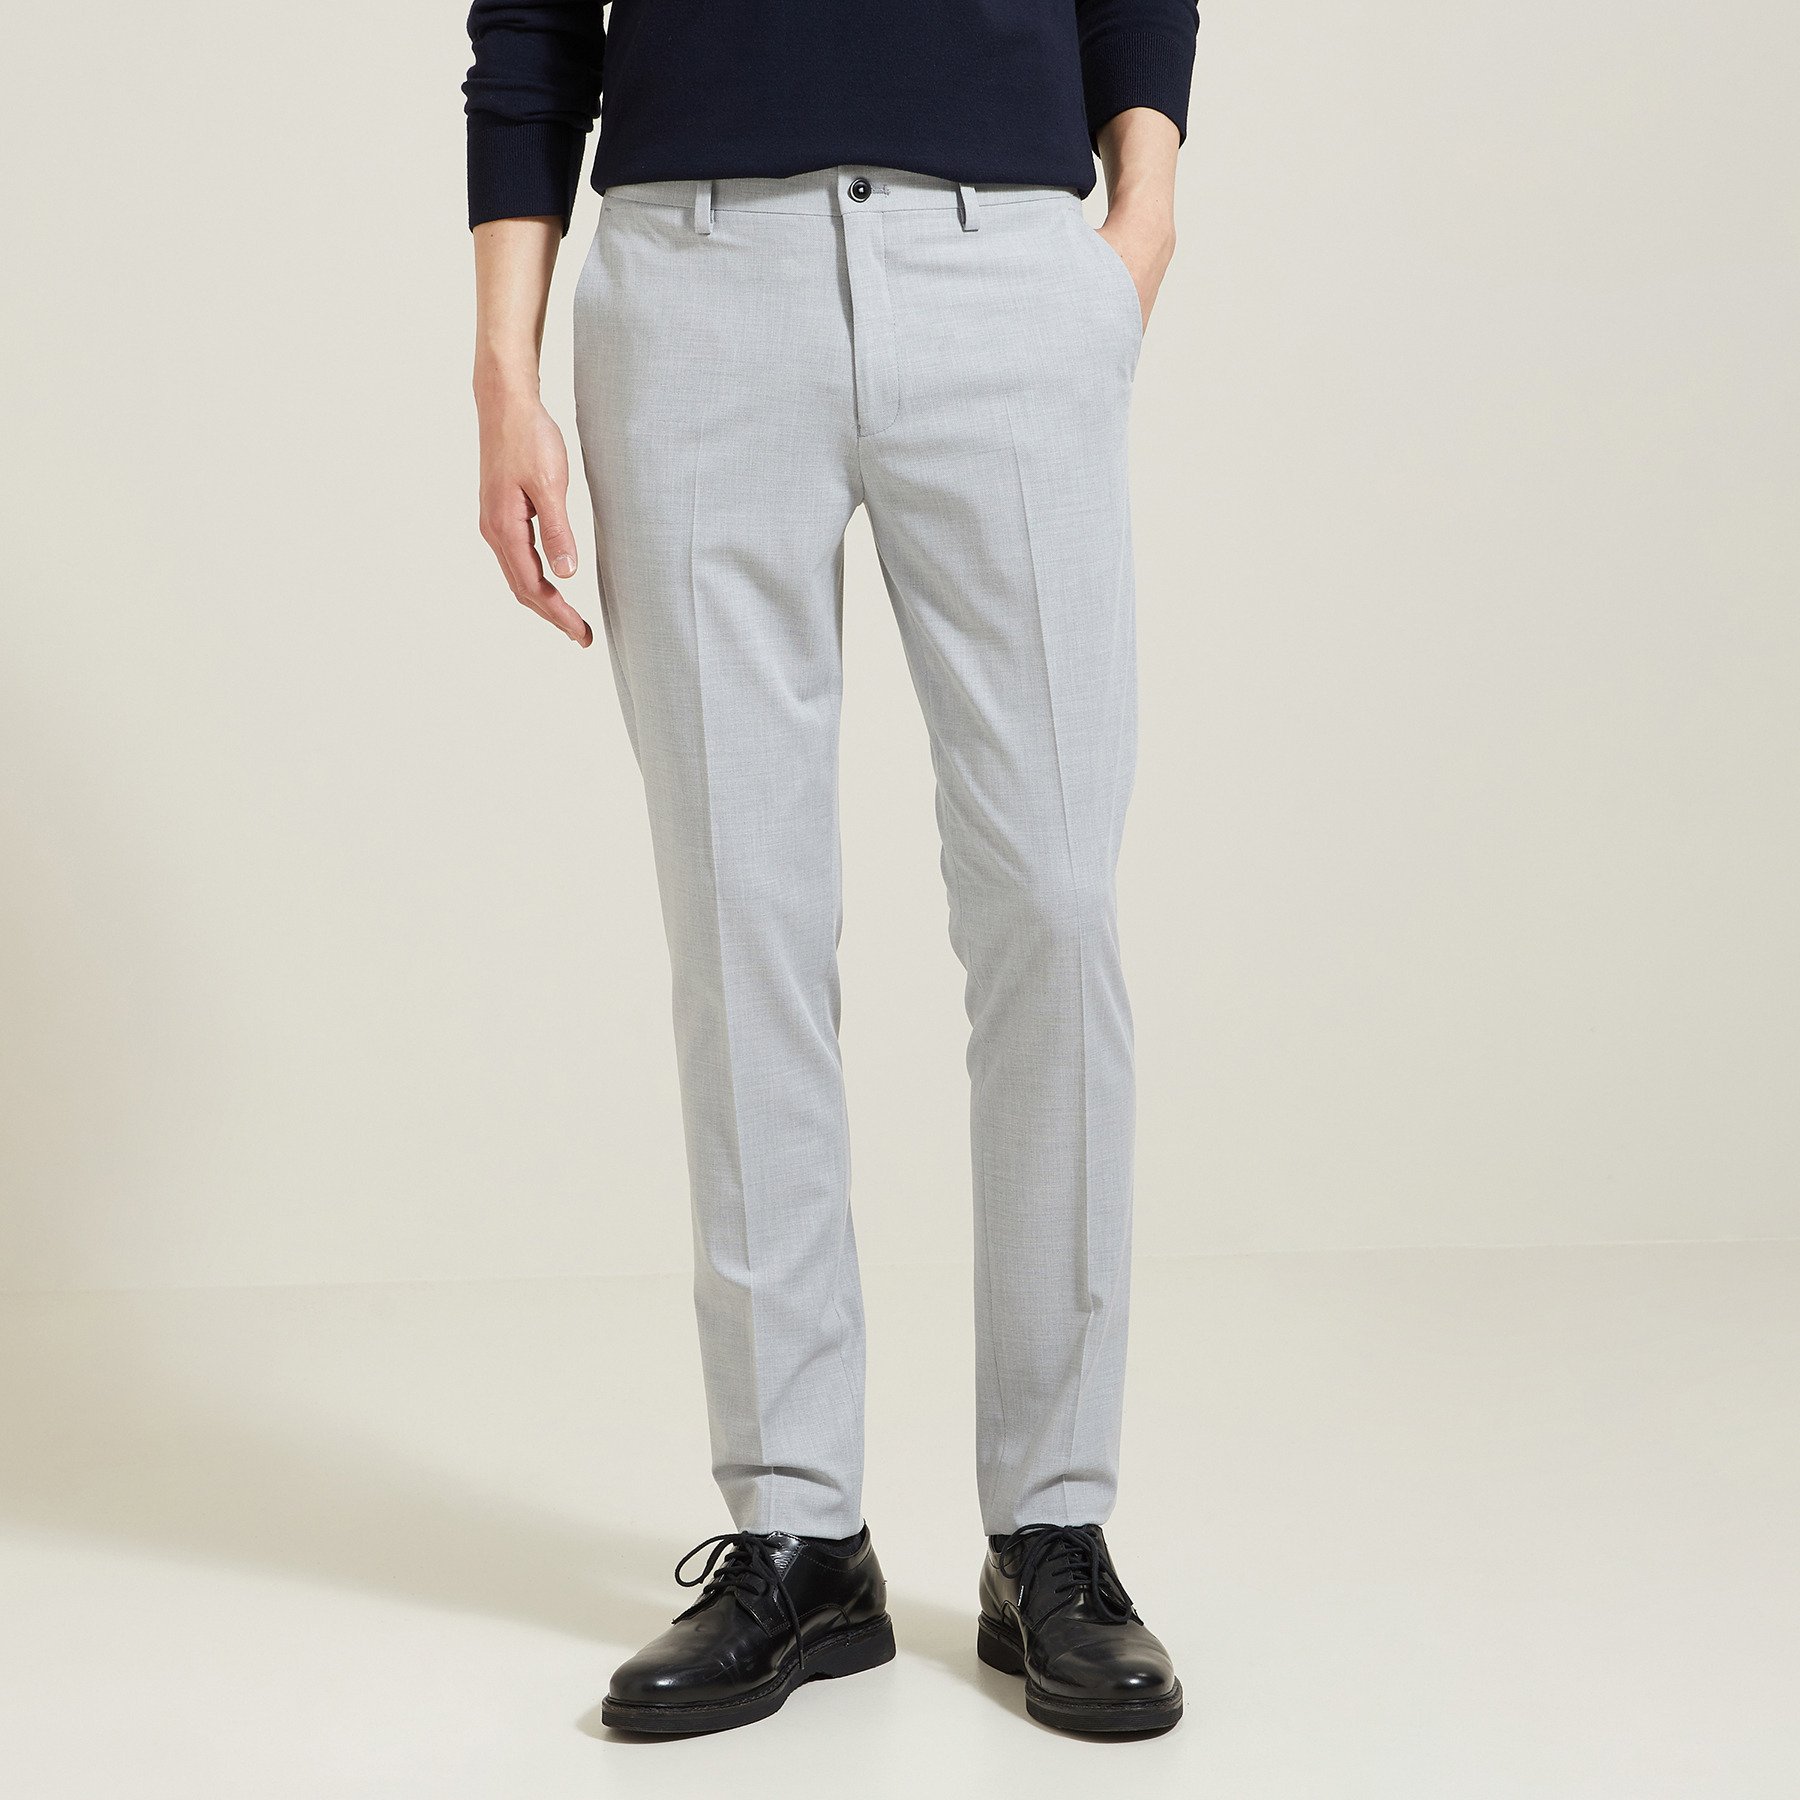 Pantalon de costume extra slim Gris 36 65% Polyester, 29% Viscose, 6% Elasthanne Homme